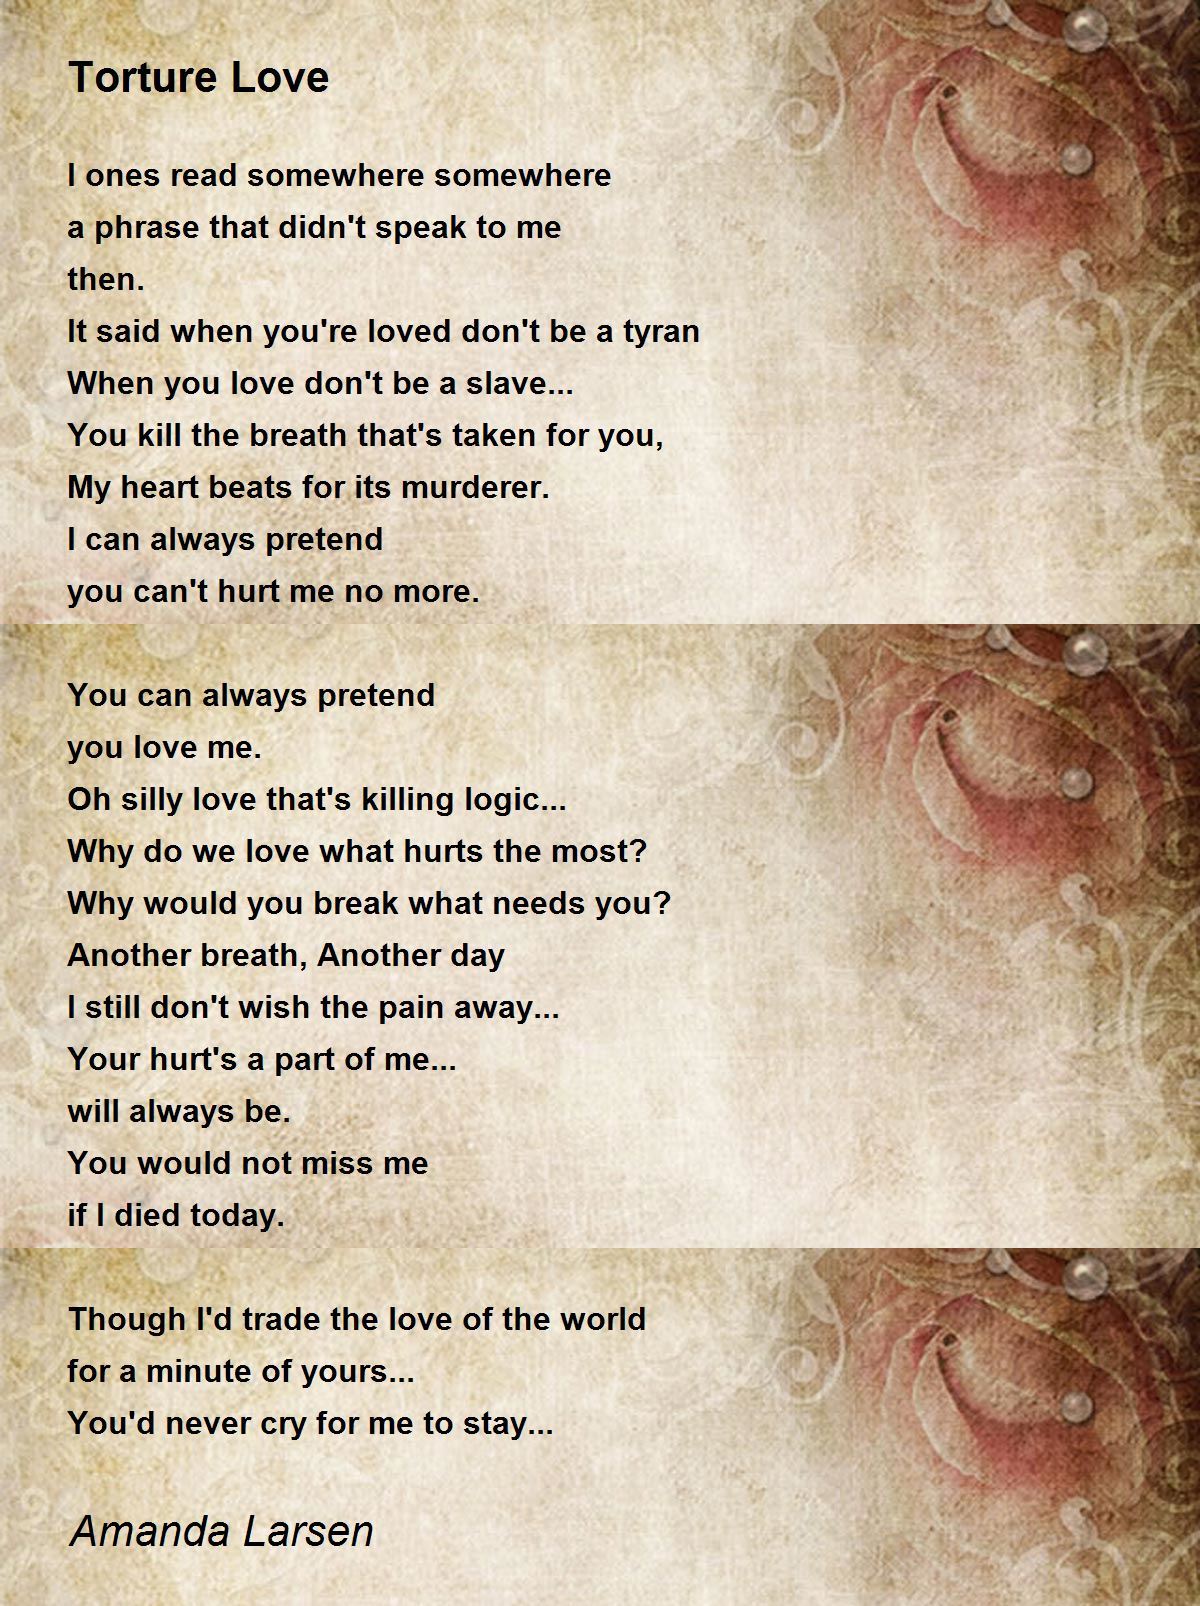 Torture Love - Torture Love Poem by Amanda Larsen